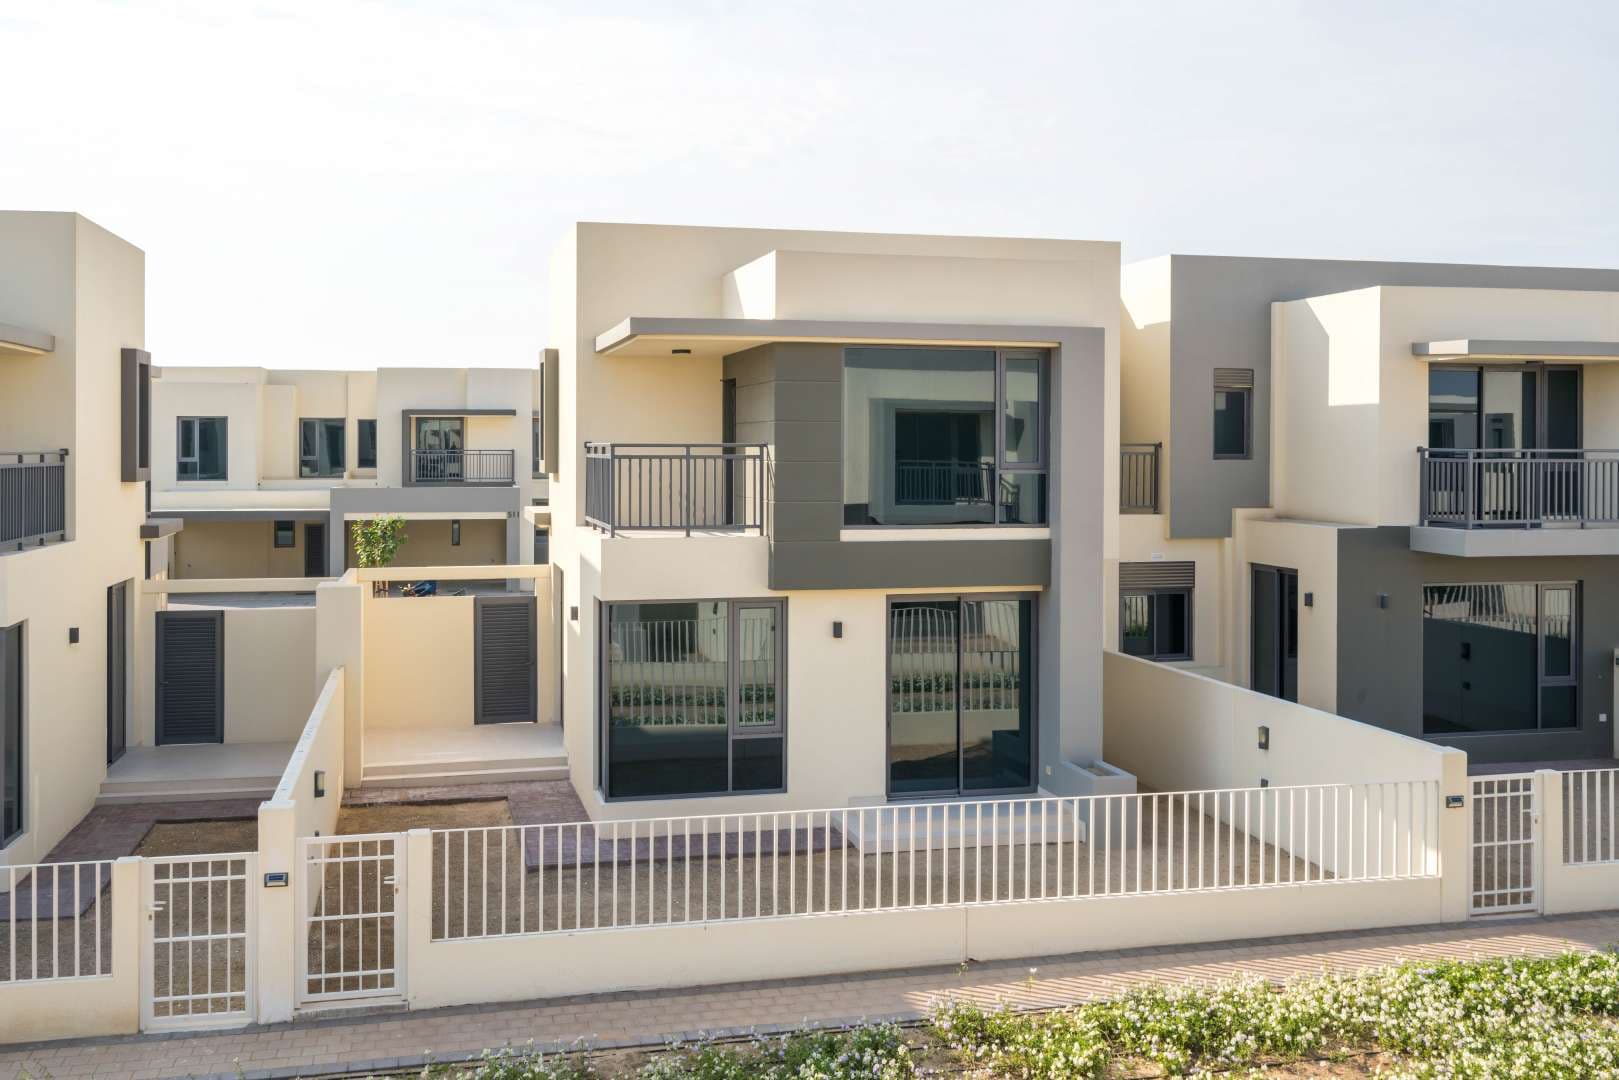 4 Bedroom Townhouse For Sale Maple At Dubai Hills Estate Lp05128 2a31f0d647db9600.jpg